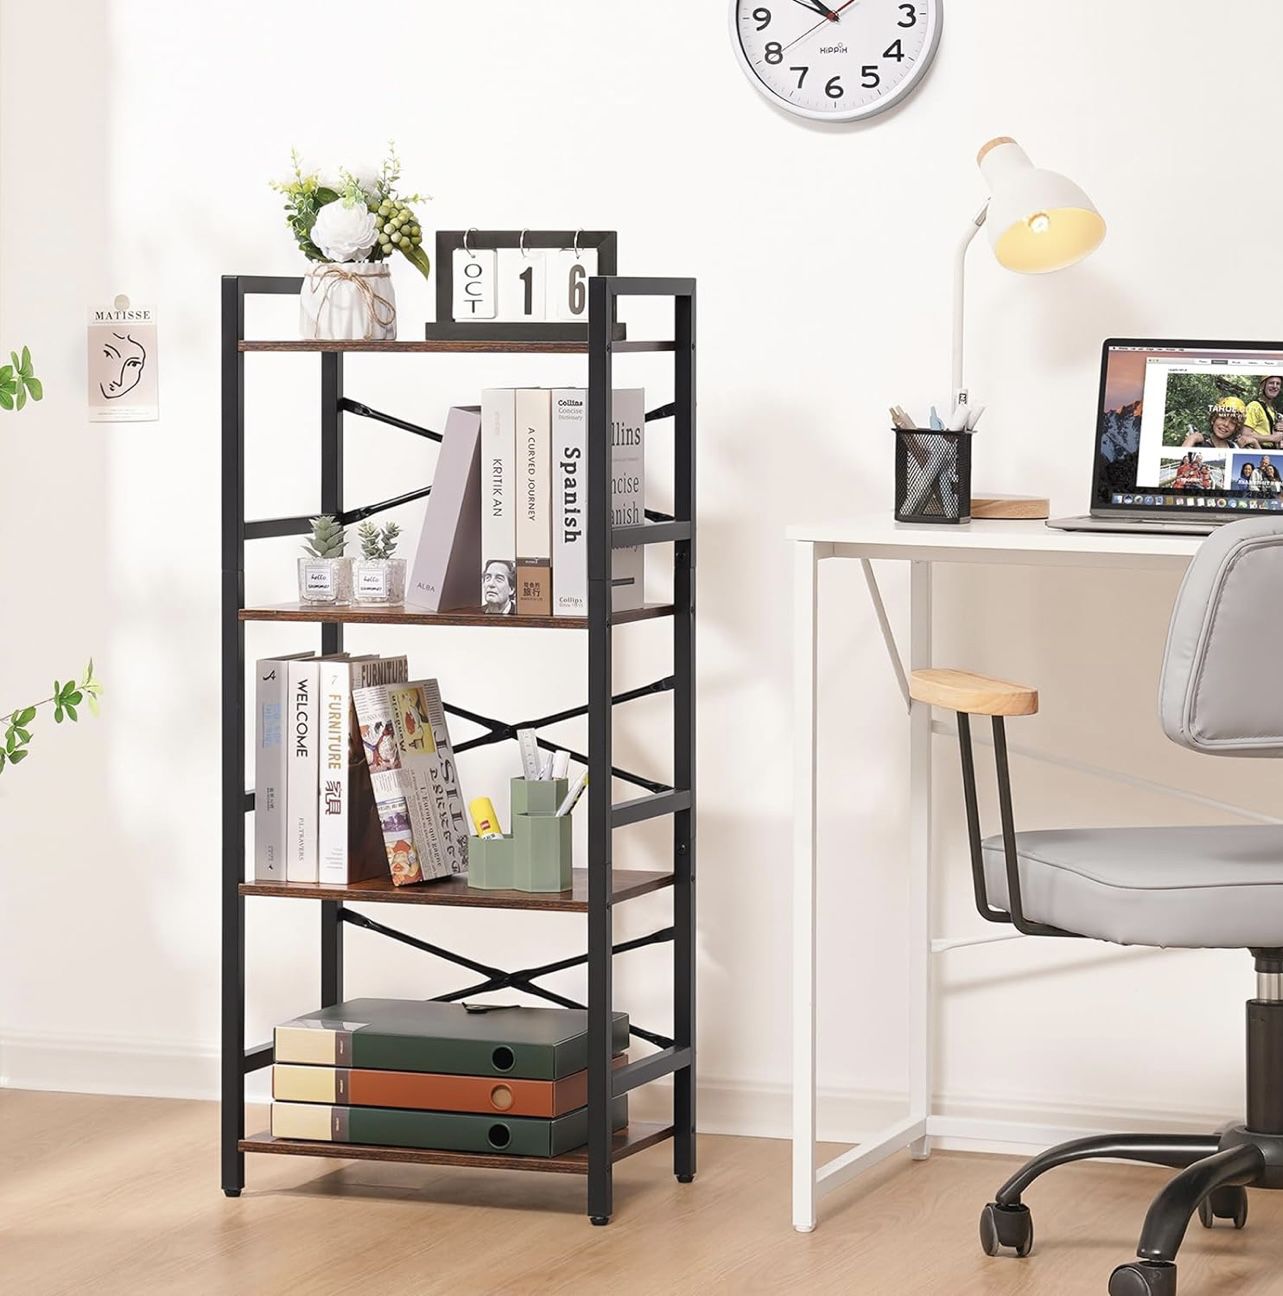 4 Tier Bookshelf - Small Book Shelf Industrial Bookcase, Narrow Book Case Book Storage Organizer